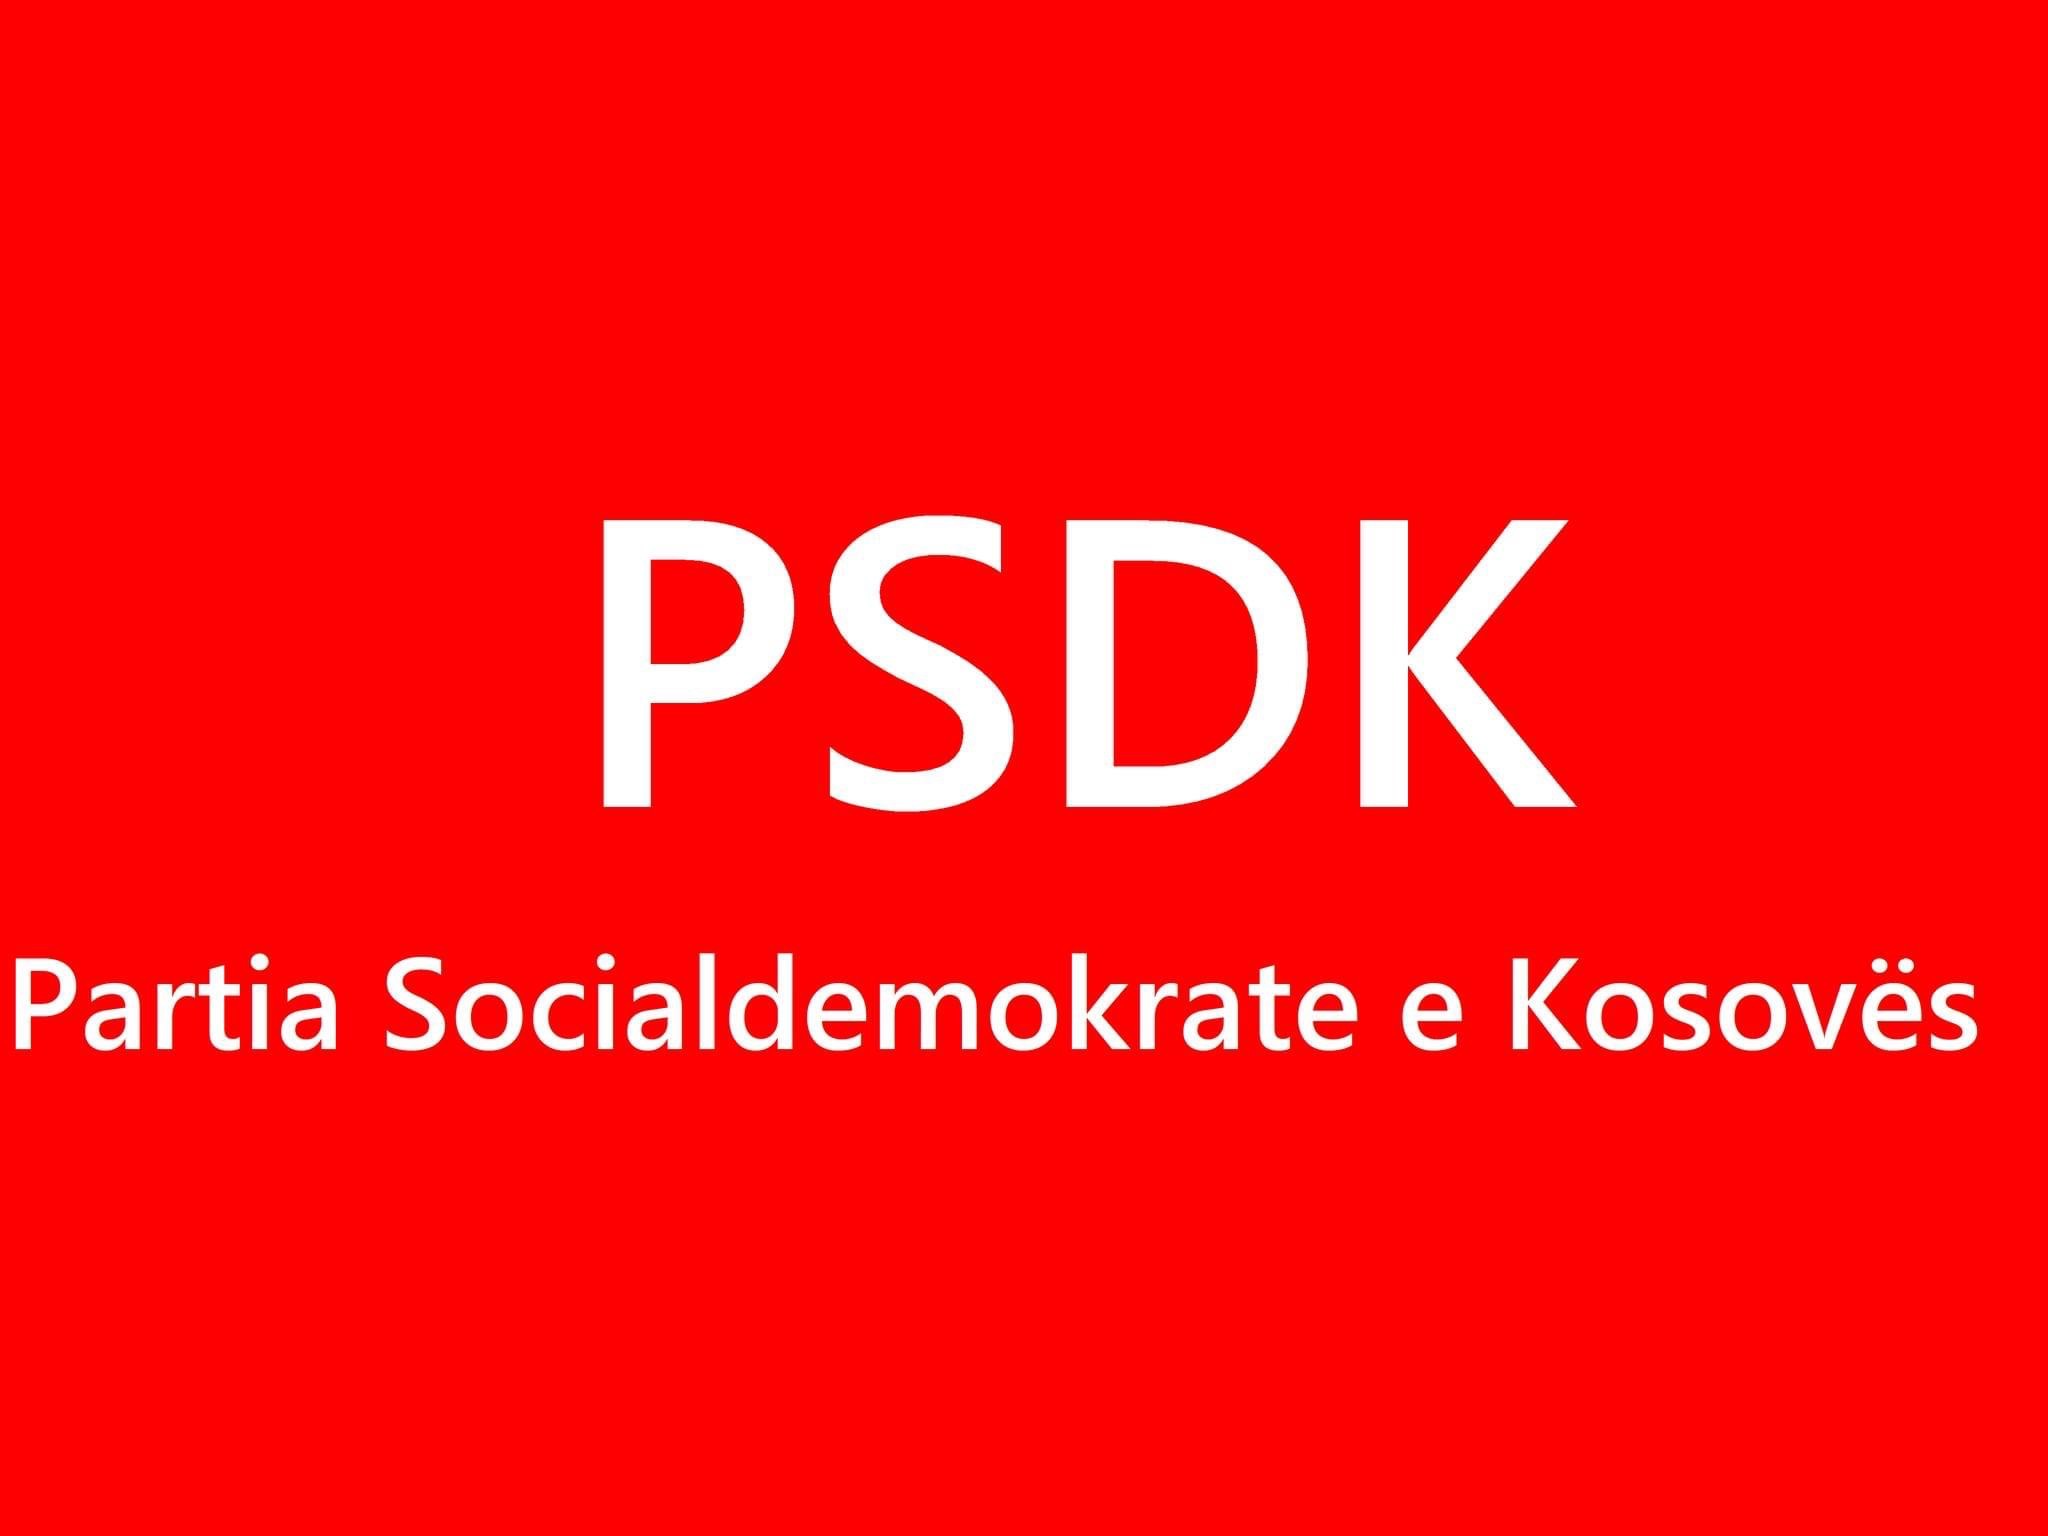 PSDK Partia Socialdemokrate e Kosovës